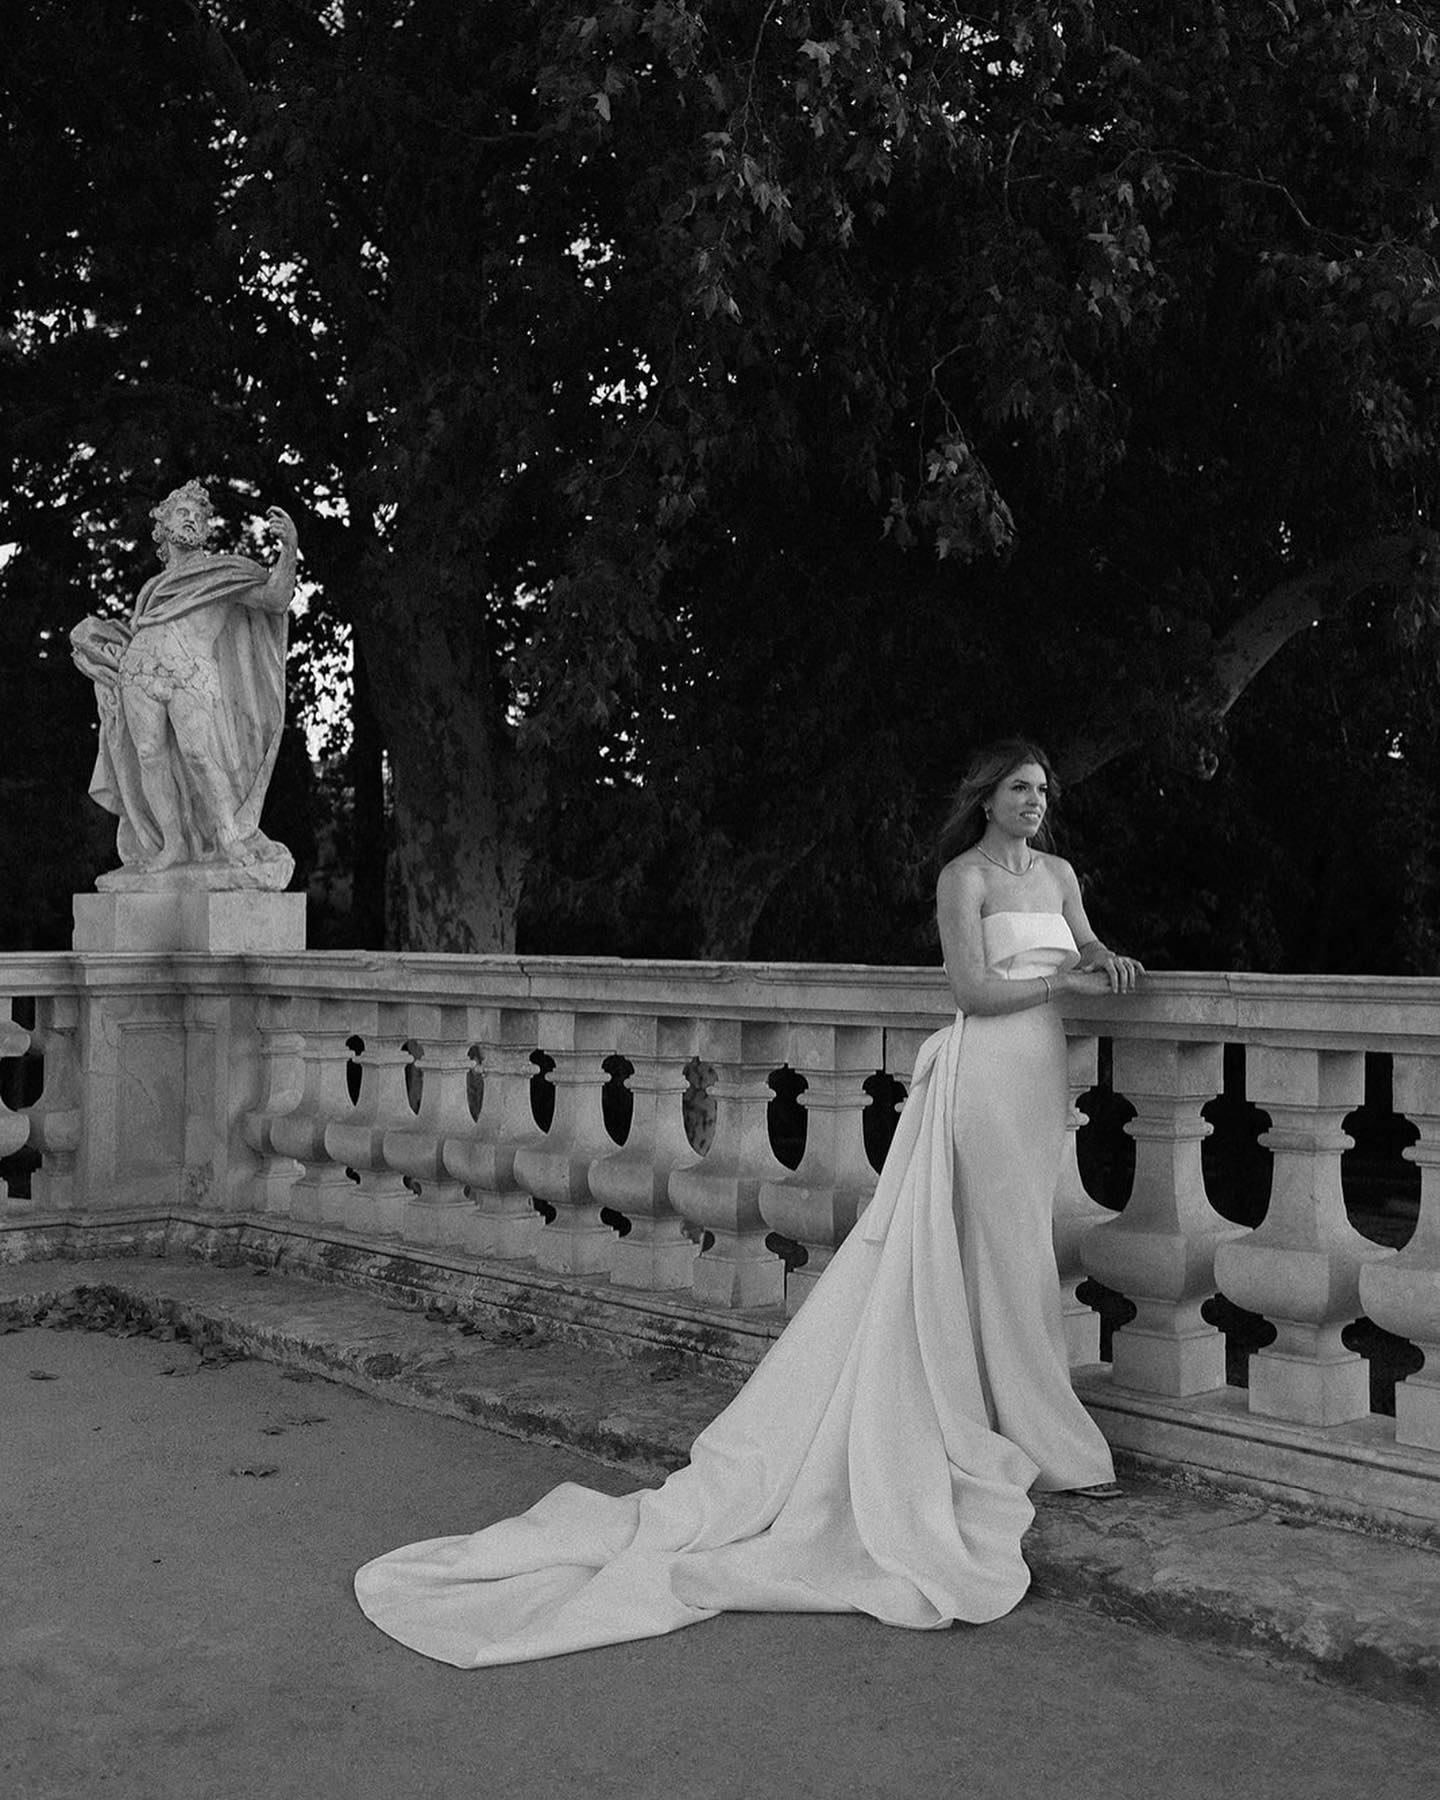 Love + Palace | Palácio de Queluz, Lisbon.

Wedding Planner - @somethingnew_weddingsportugal 
Video - @storytelling_film